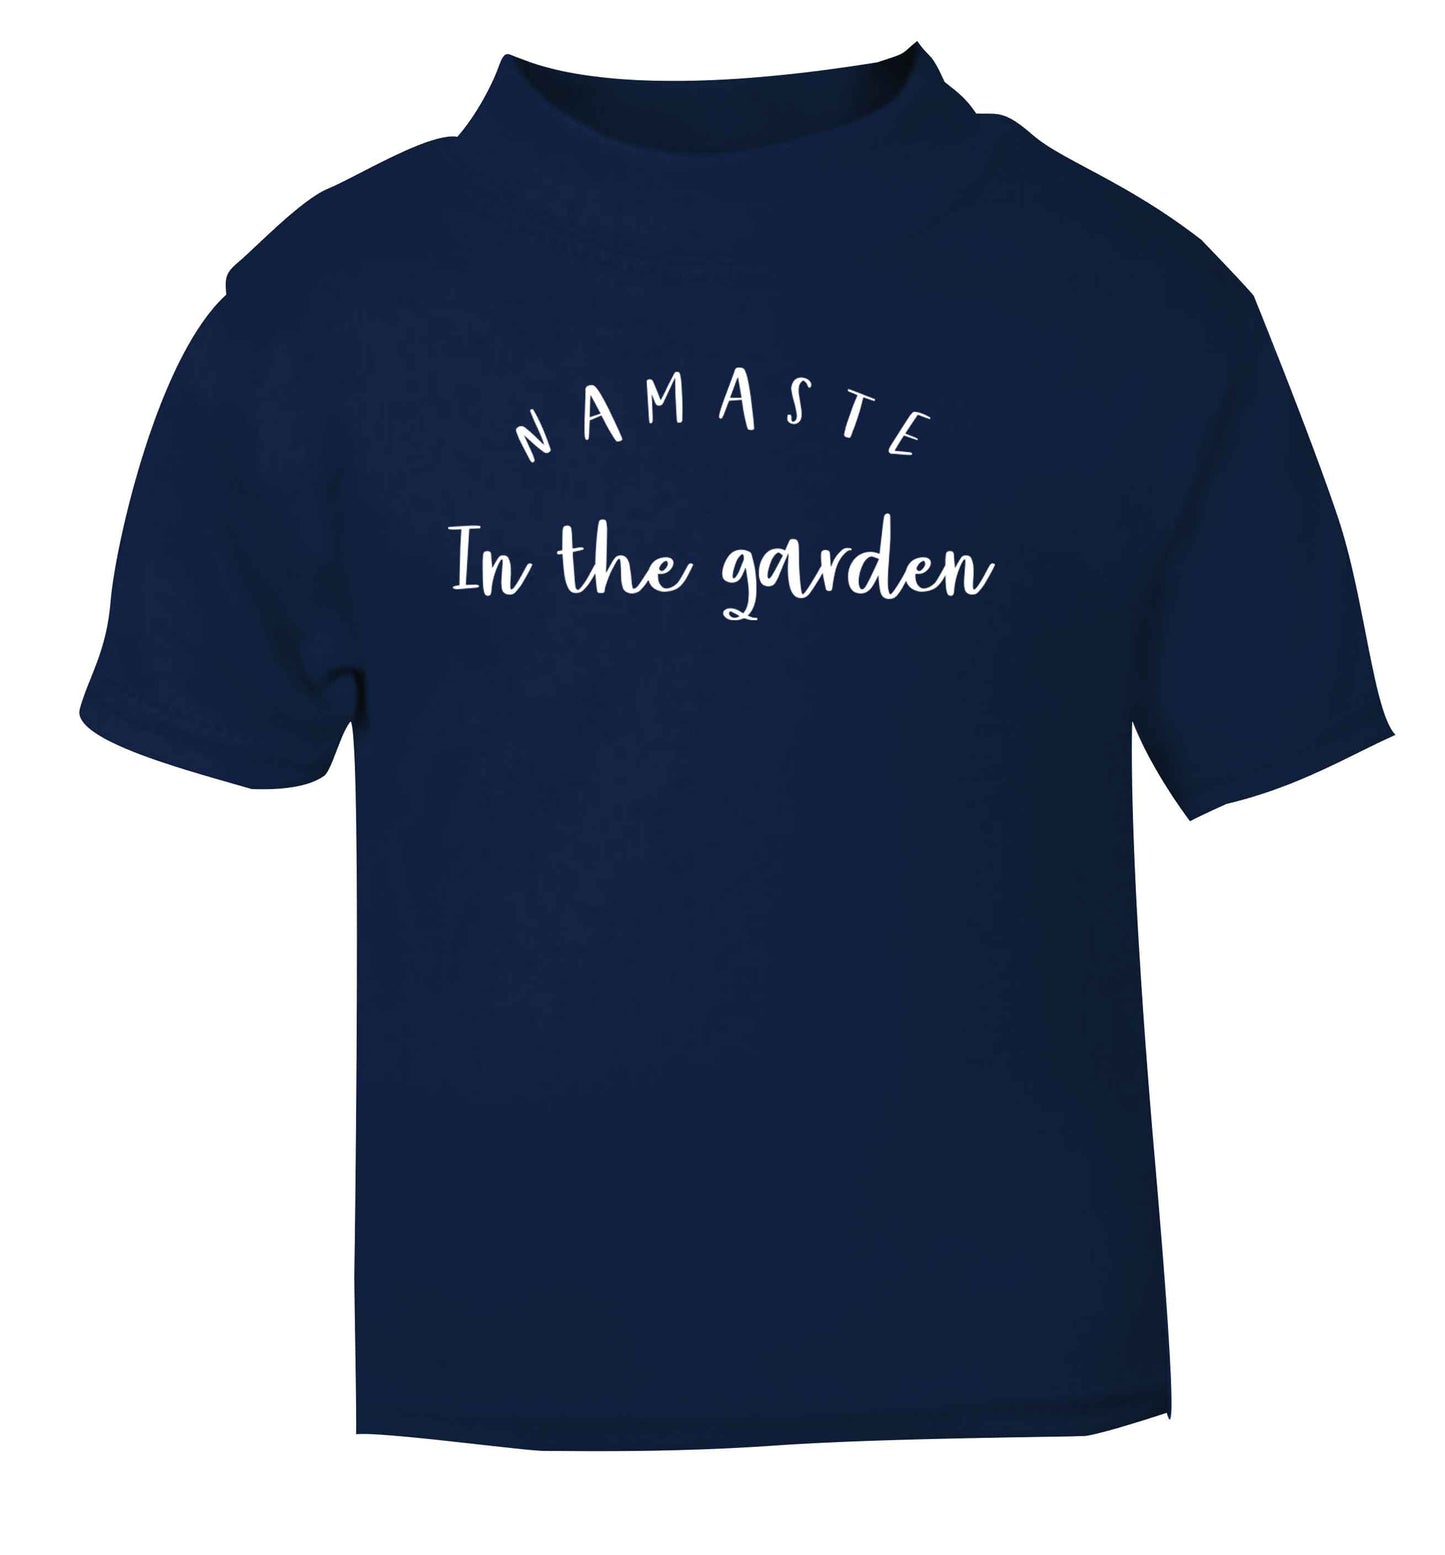 Namaste in the garden navy Baby Toddler Tshirt 2 Years